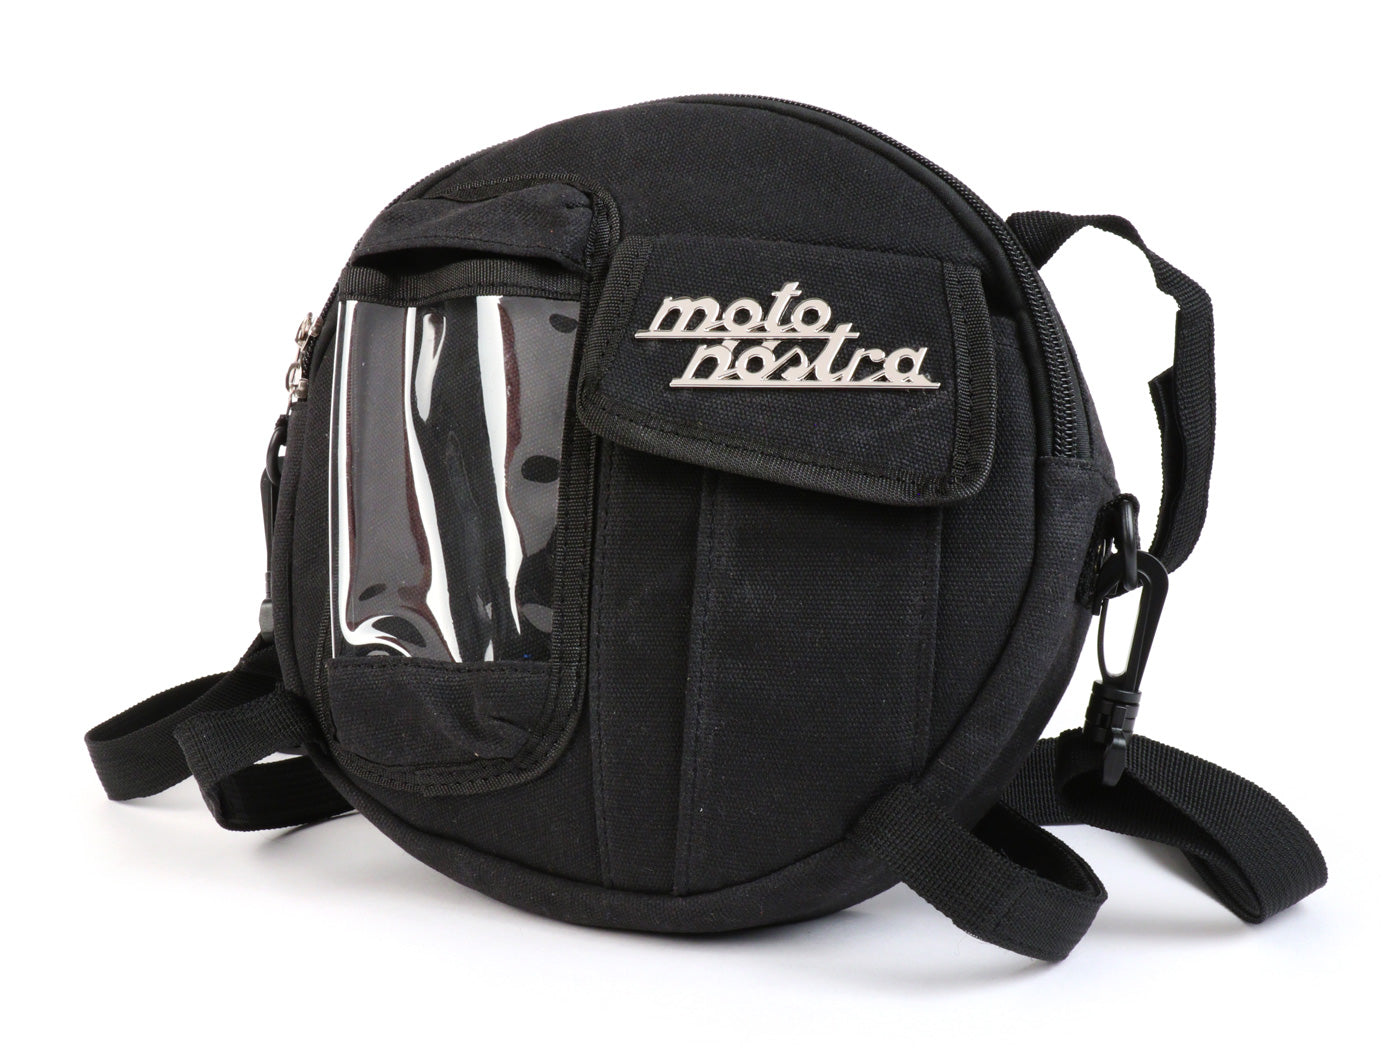 Vespa Lambretta Moto Nostra 10" Spare Wheel Holder Bag - Black